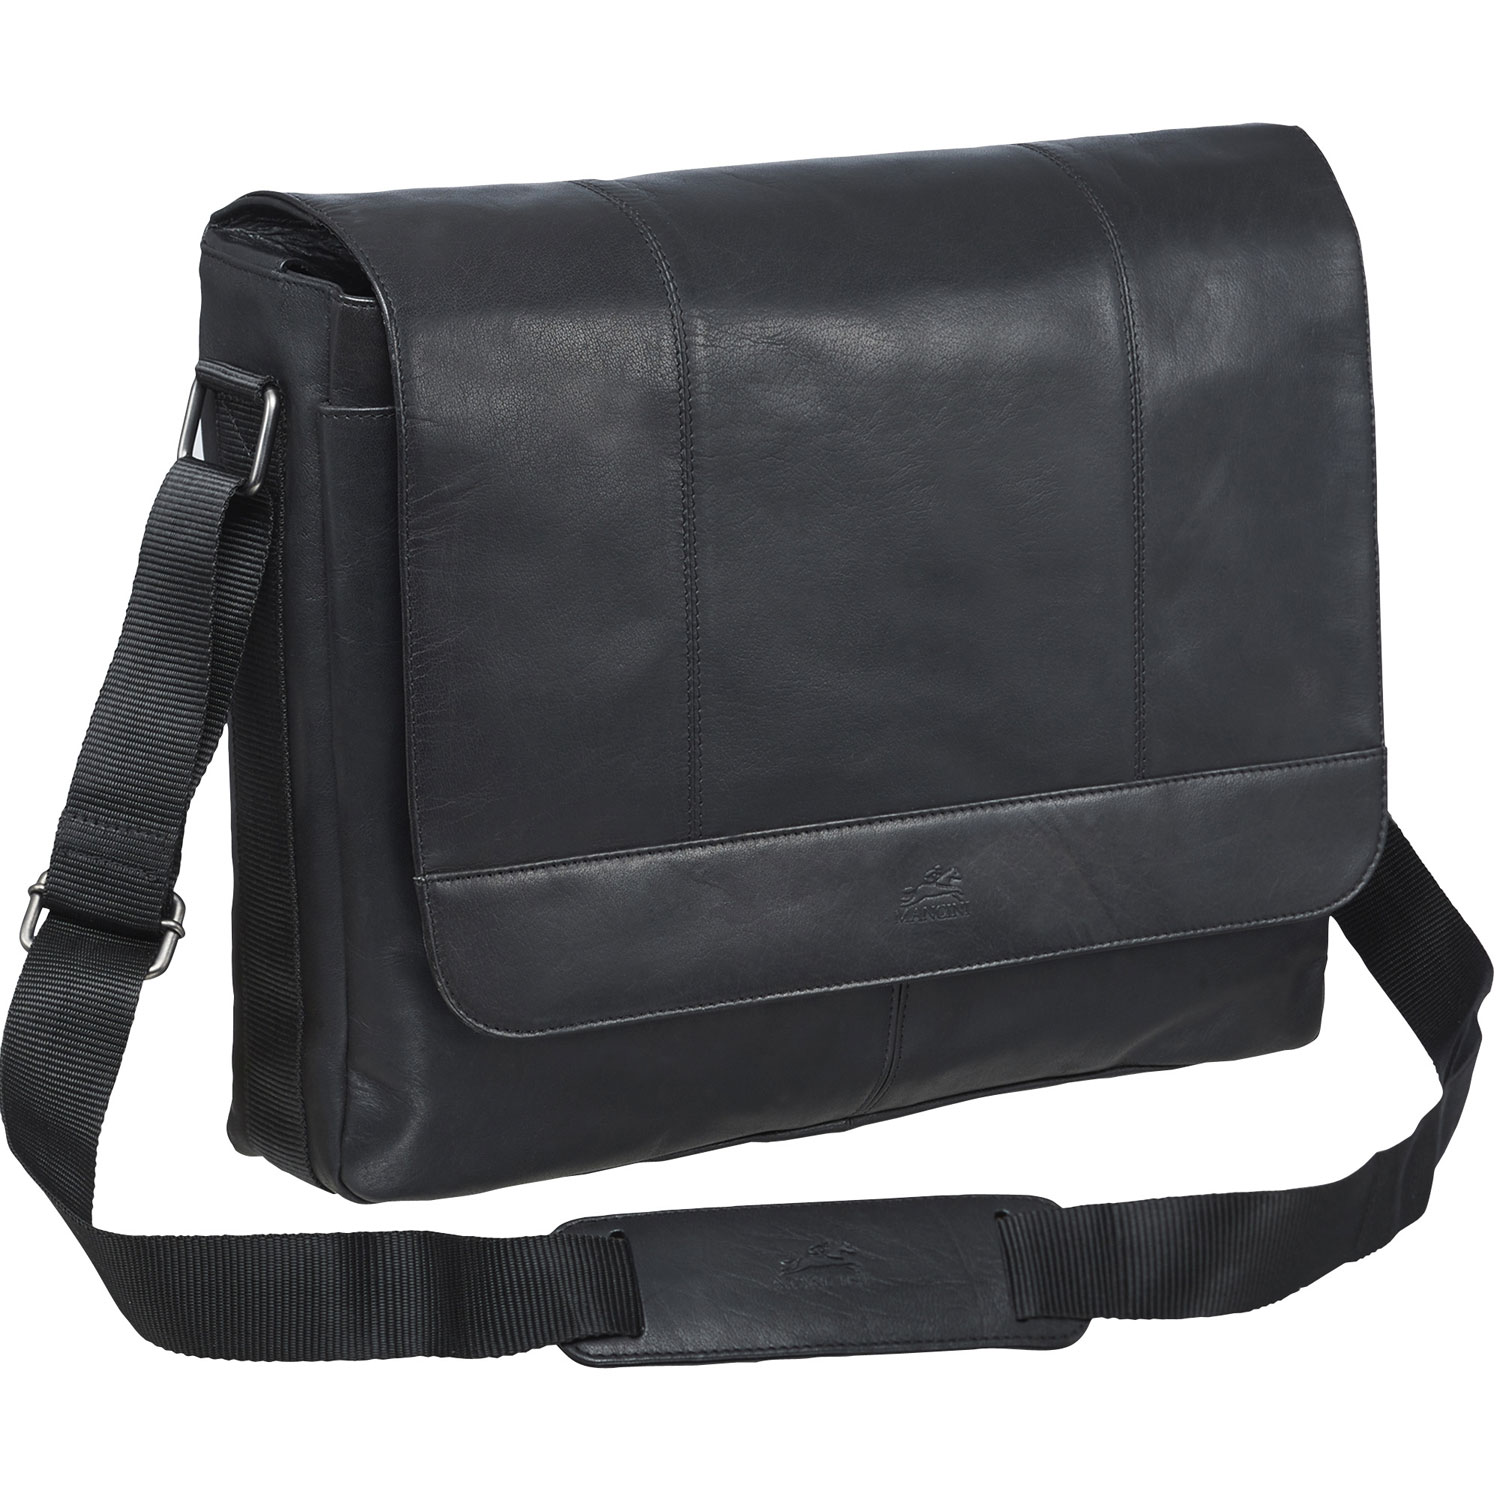 Mancini Buffalo Leather 15" Laptop Messenger Bag - Black (99-5468)